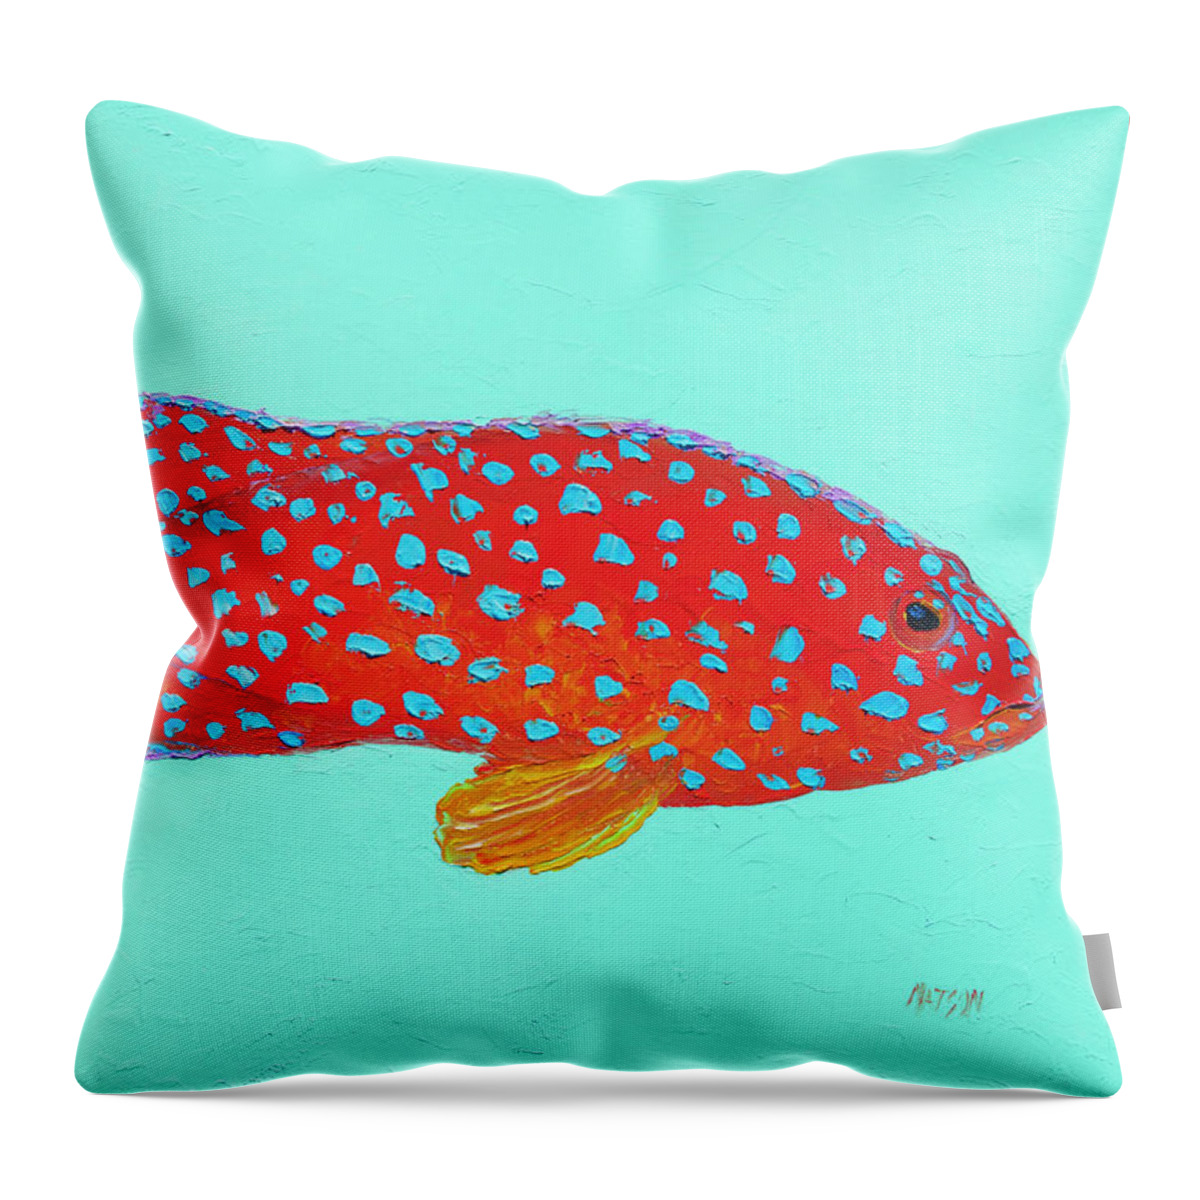 Miniatus Grouper Throw Pillow featuring the painting Miniatus Grouper Fish by Jan Matson